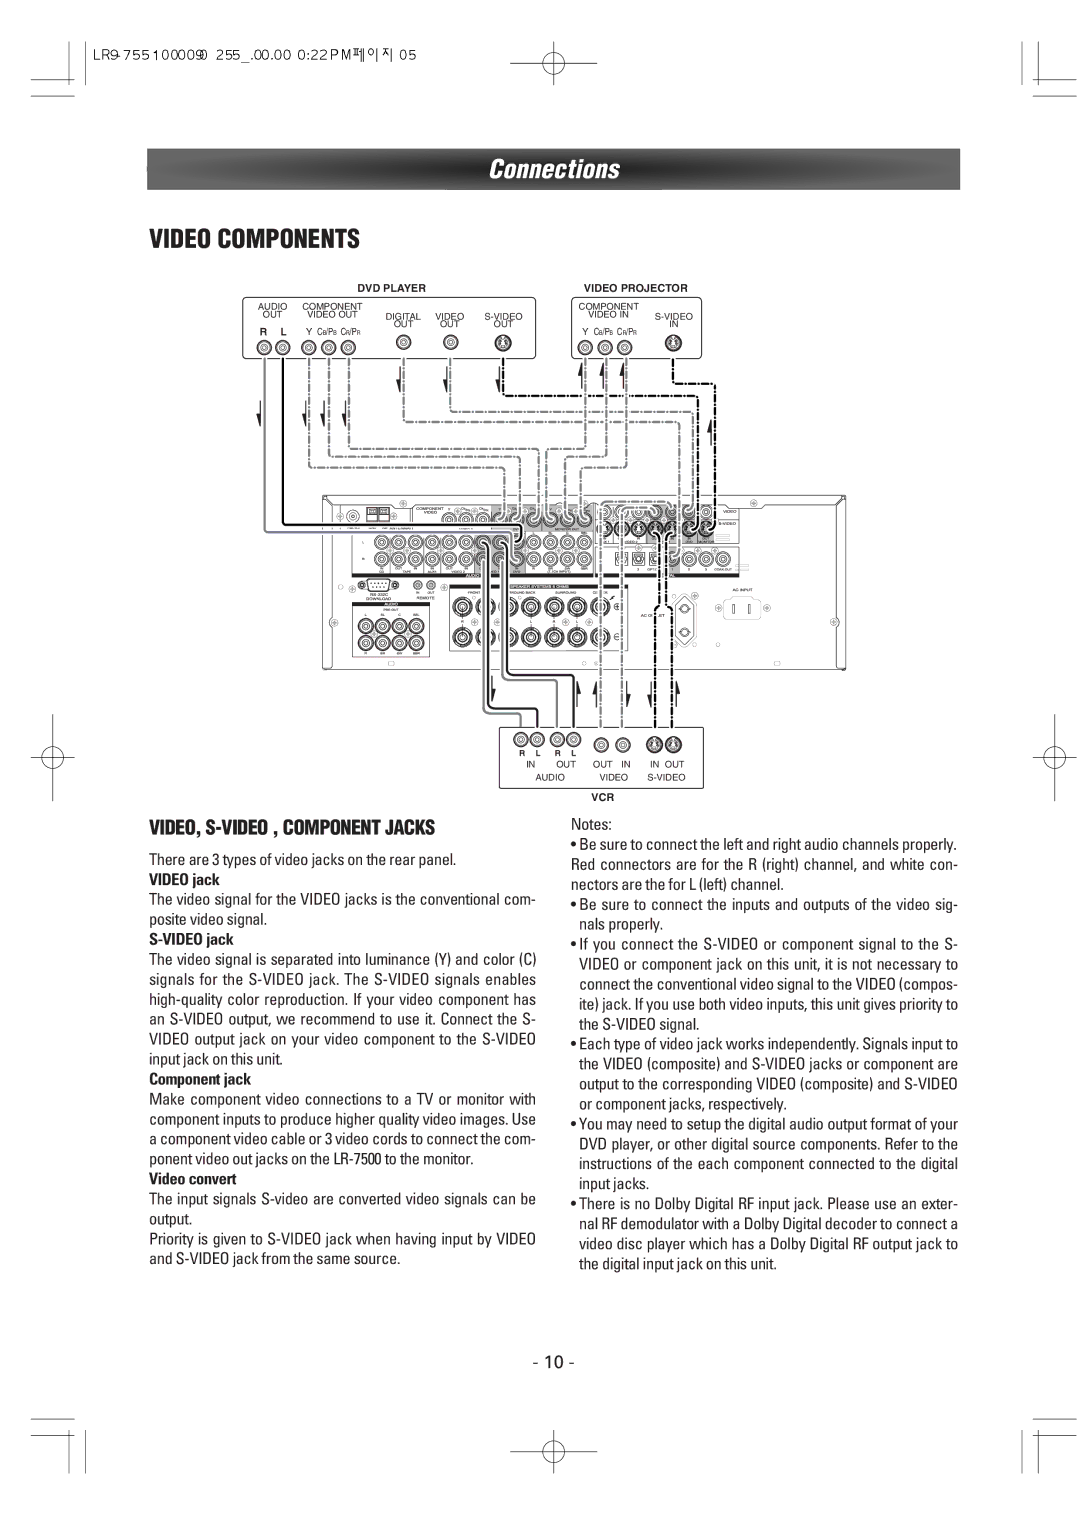 Dantax LR-7500 manual Video jack, Component jack, Video convert 